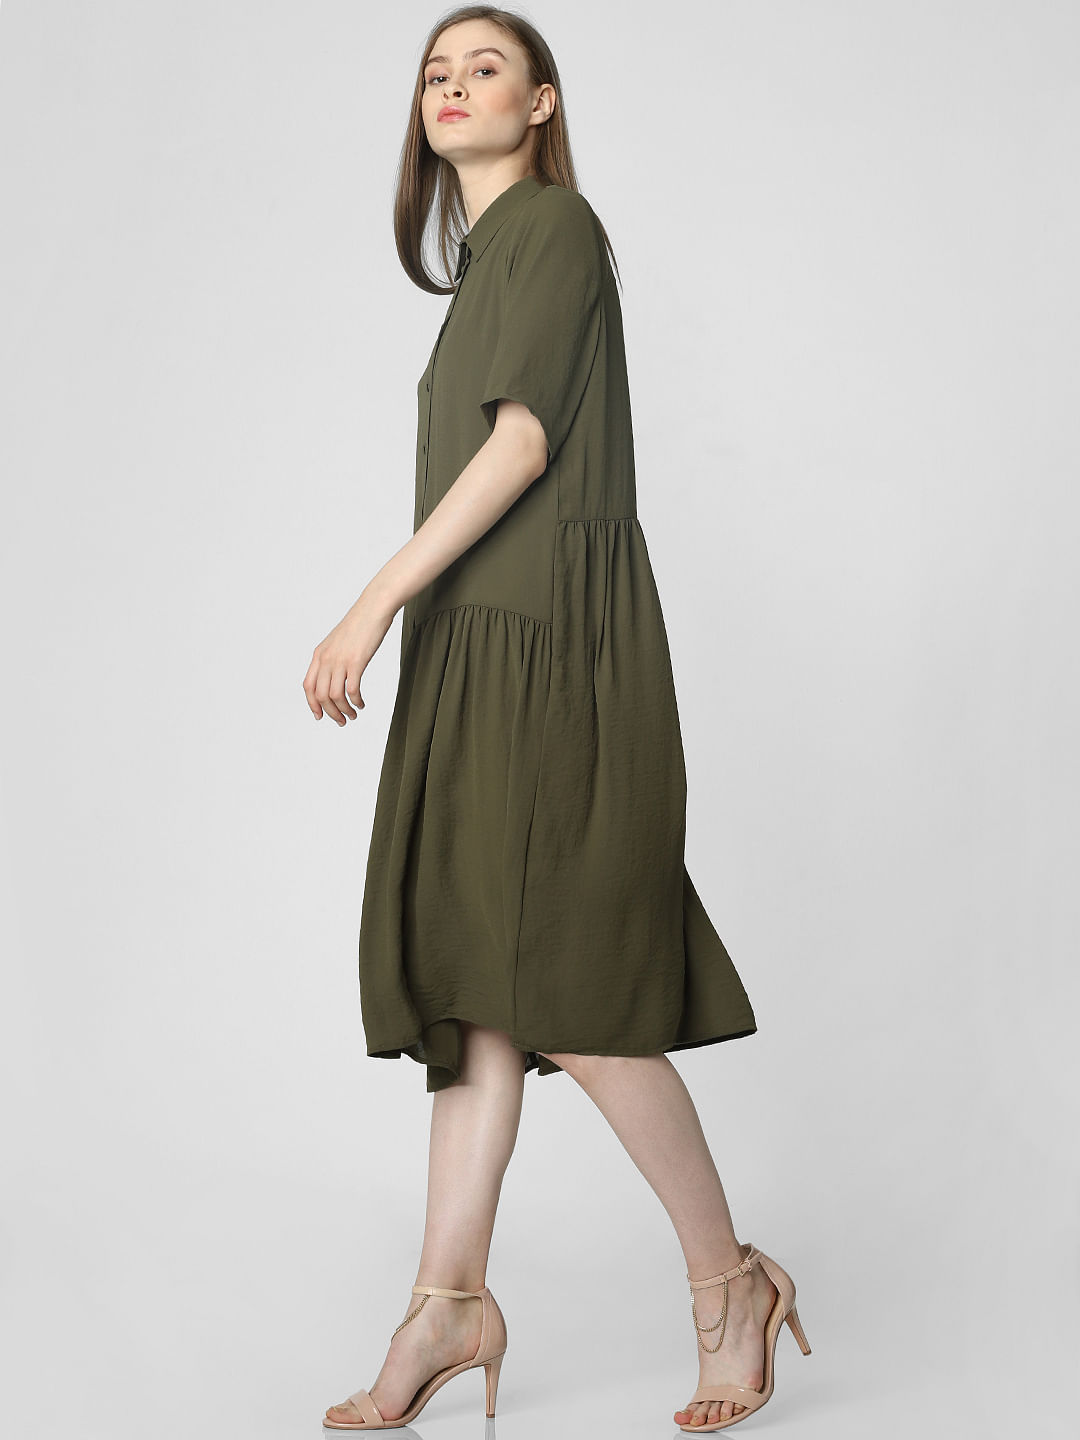 womens olive green dress